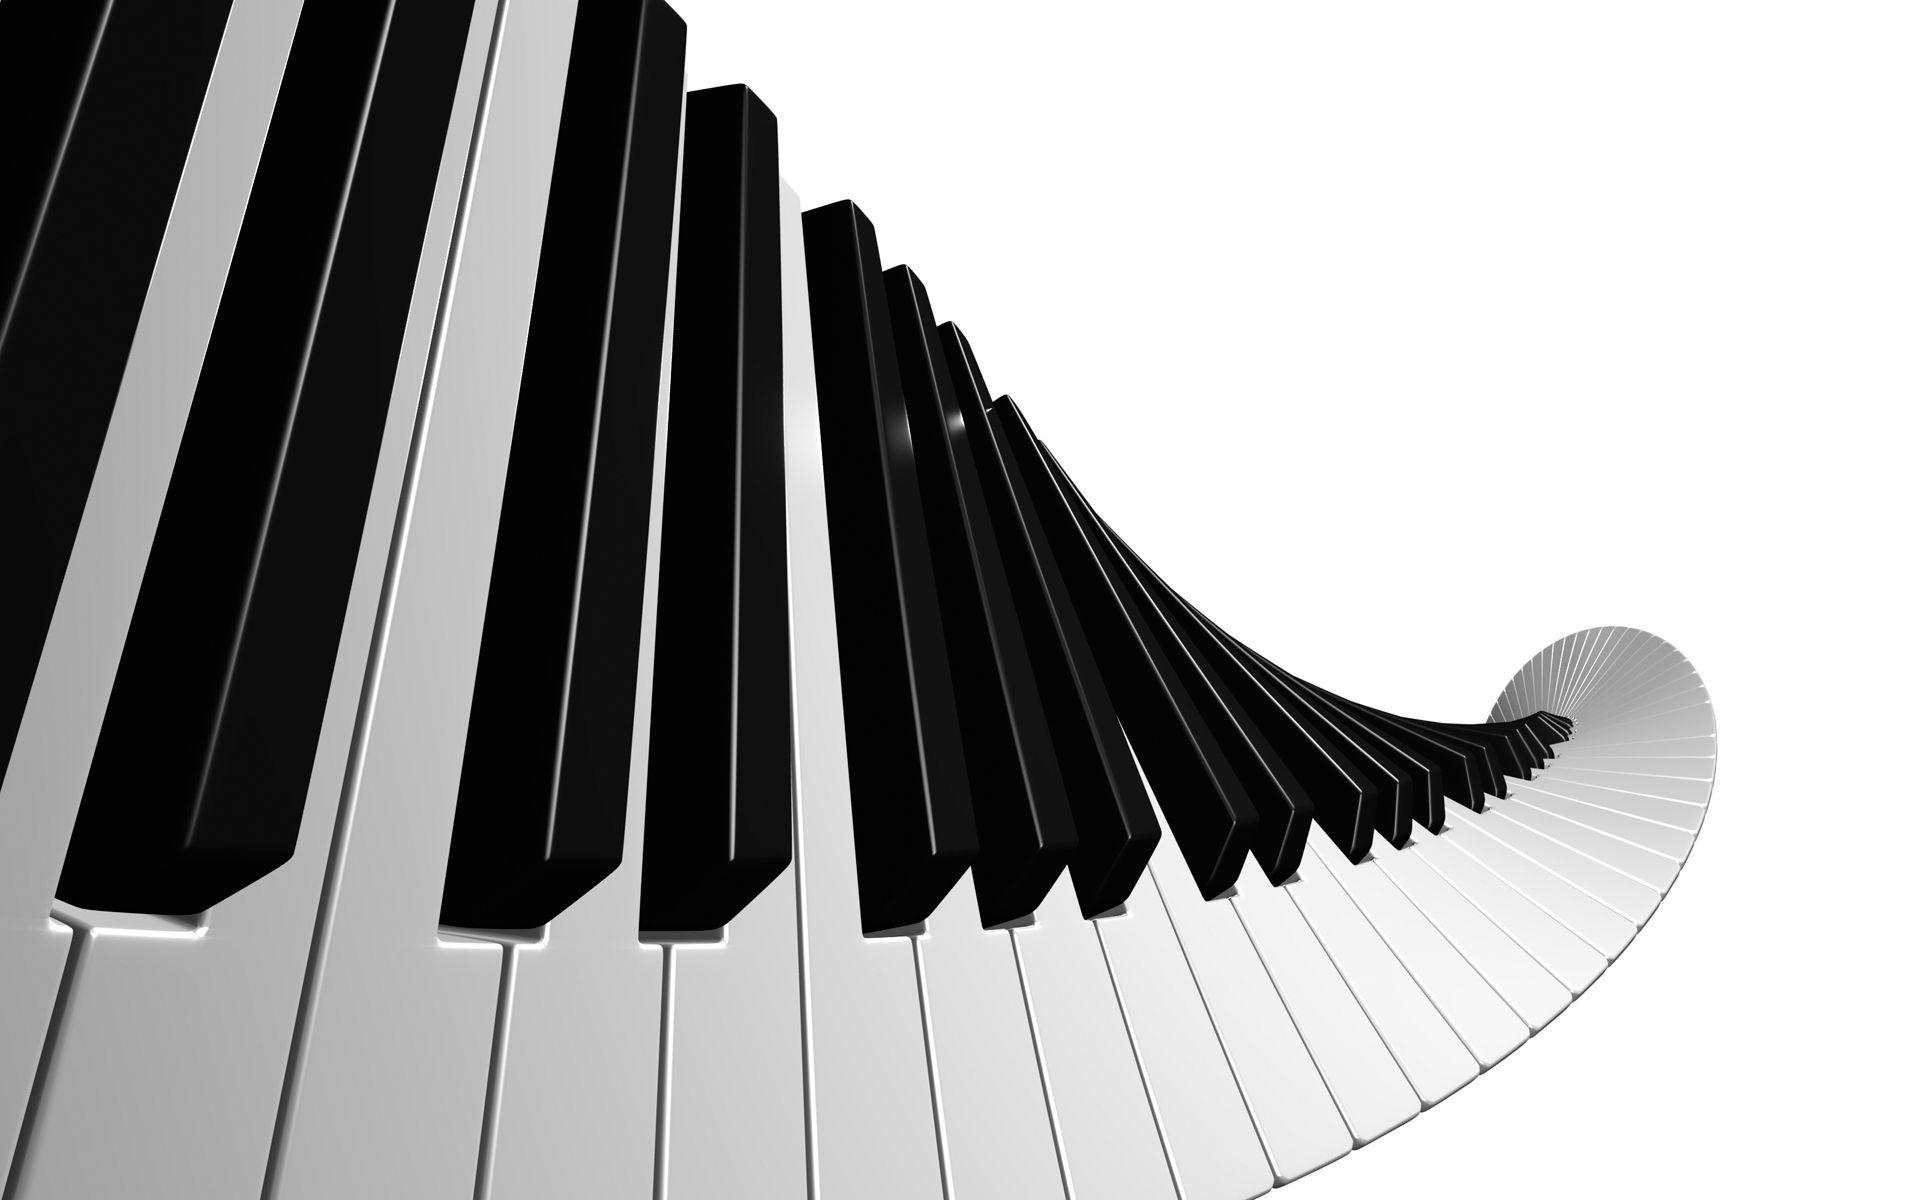 abstract art music piano wallpaper border. vergapipe